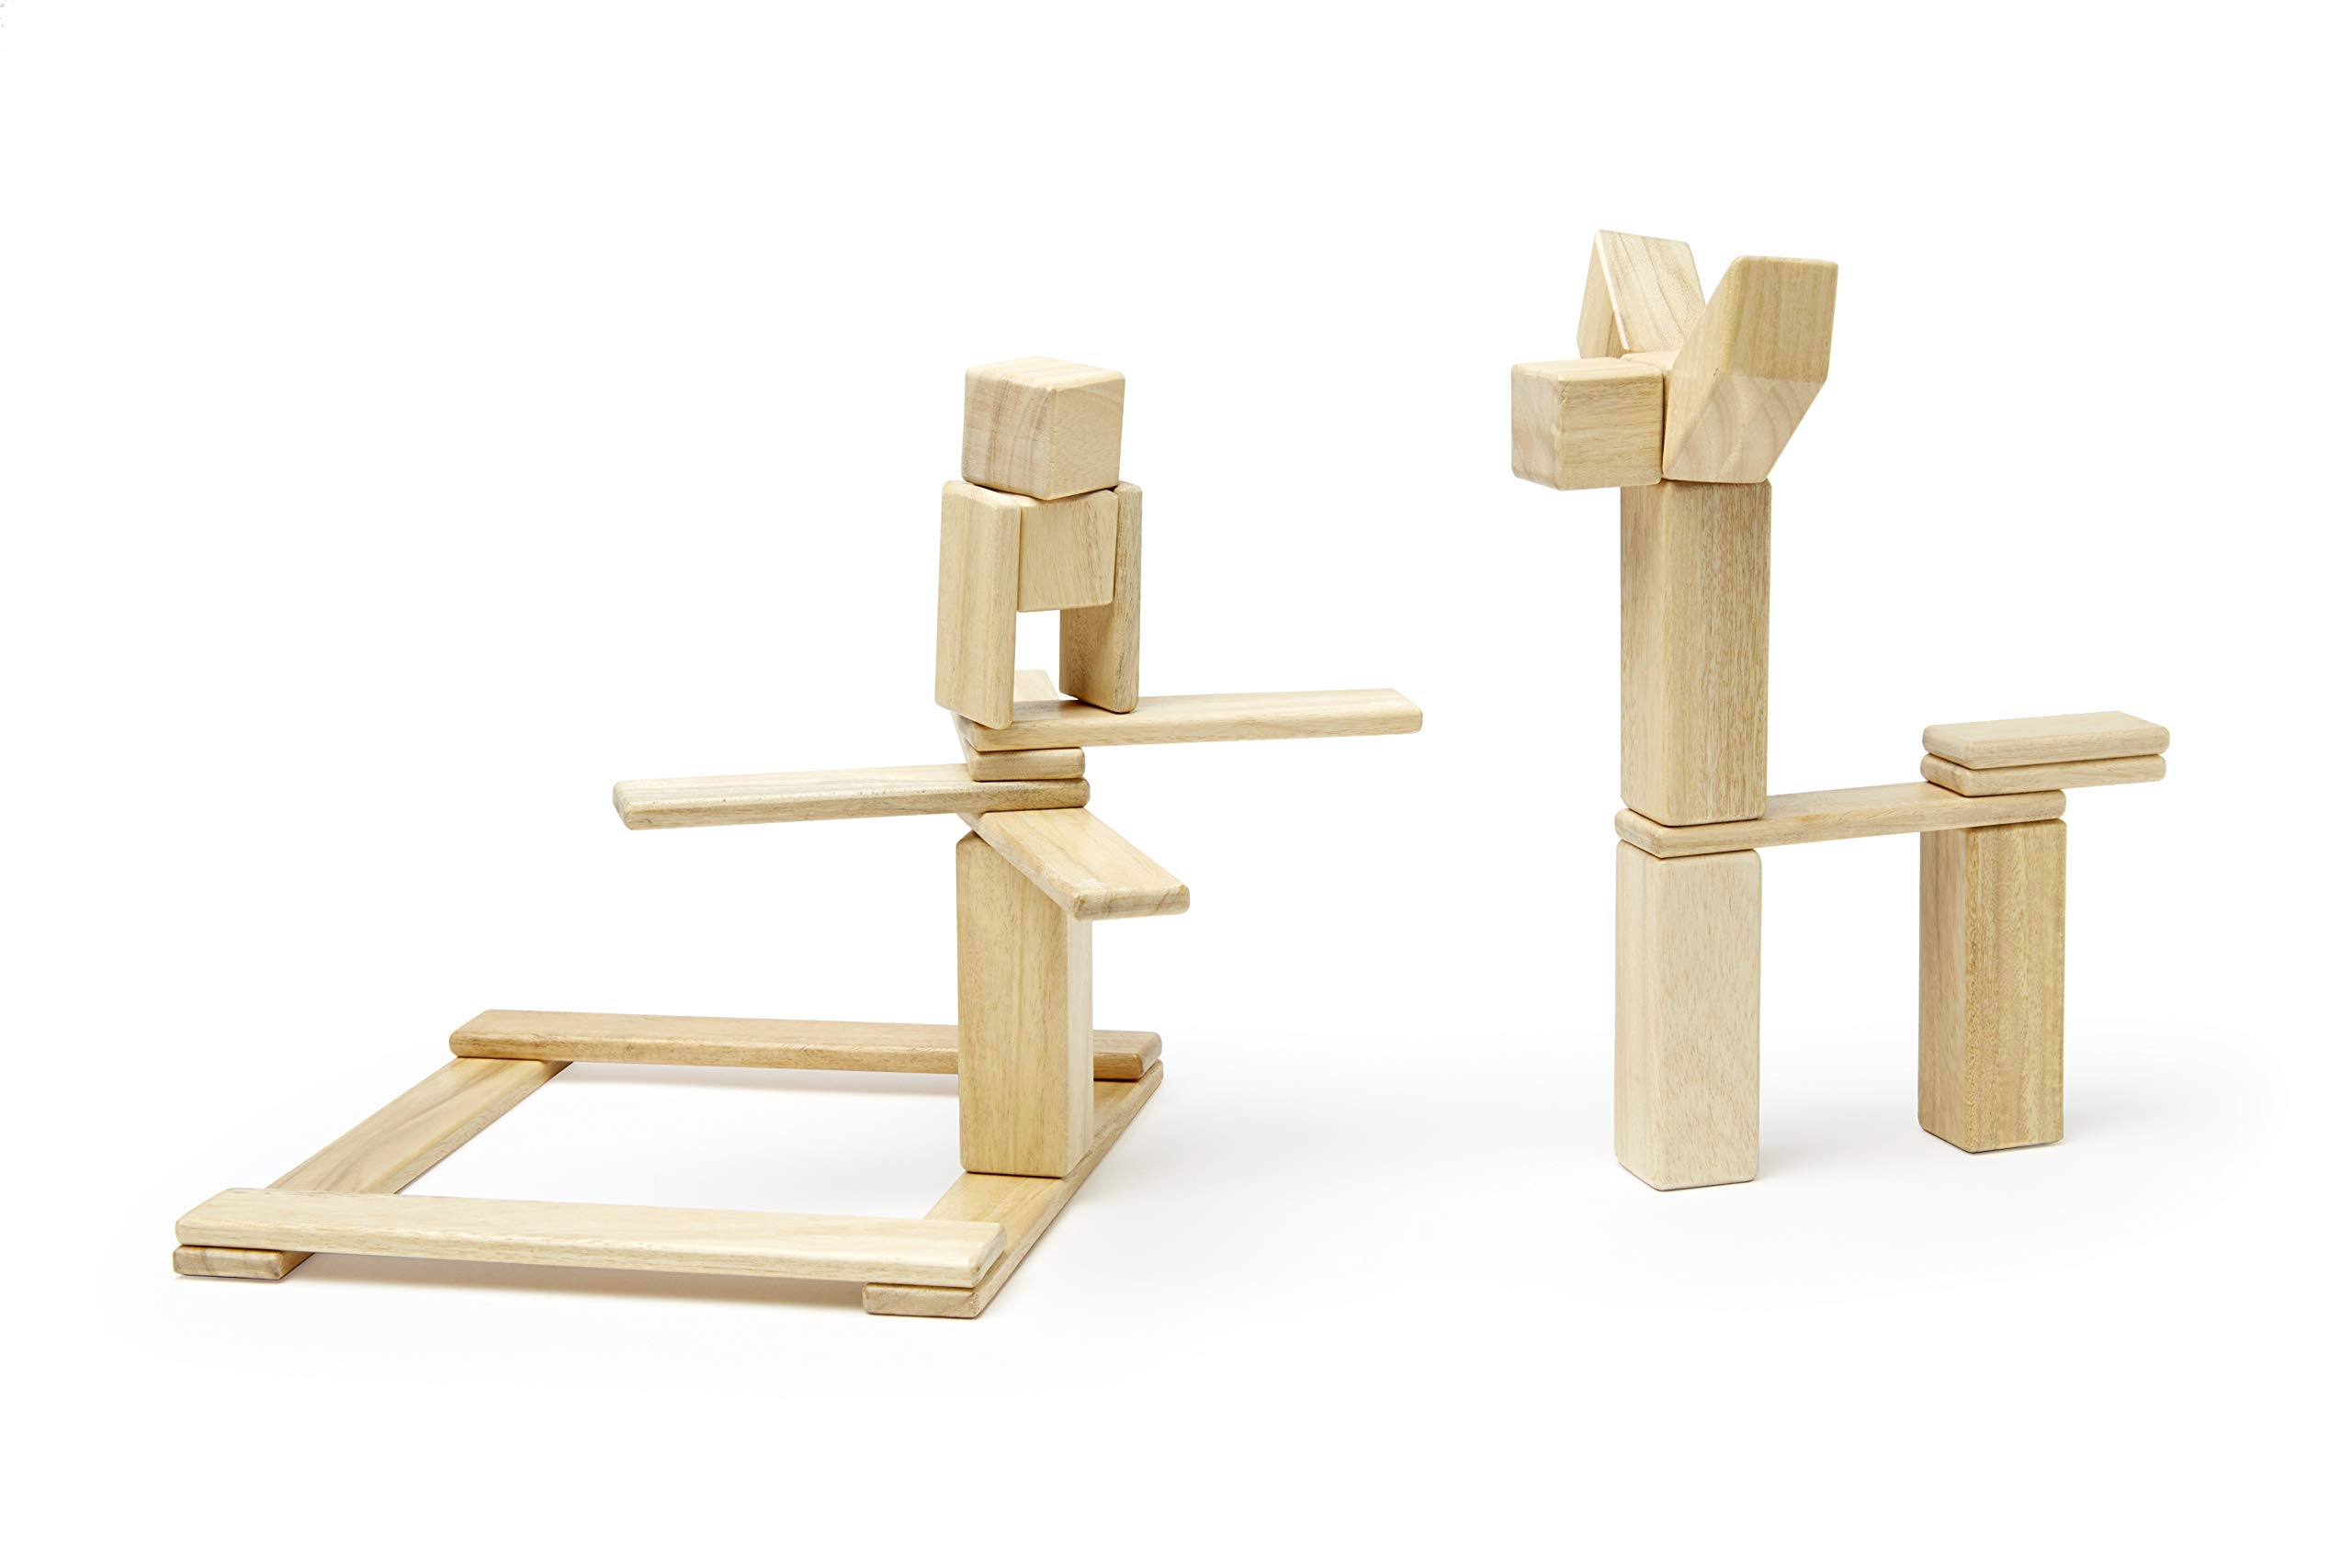 24 Piece Tegu Magnetic Wooden Block Set, Natural